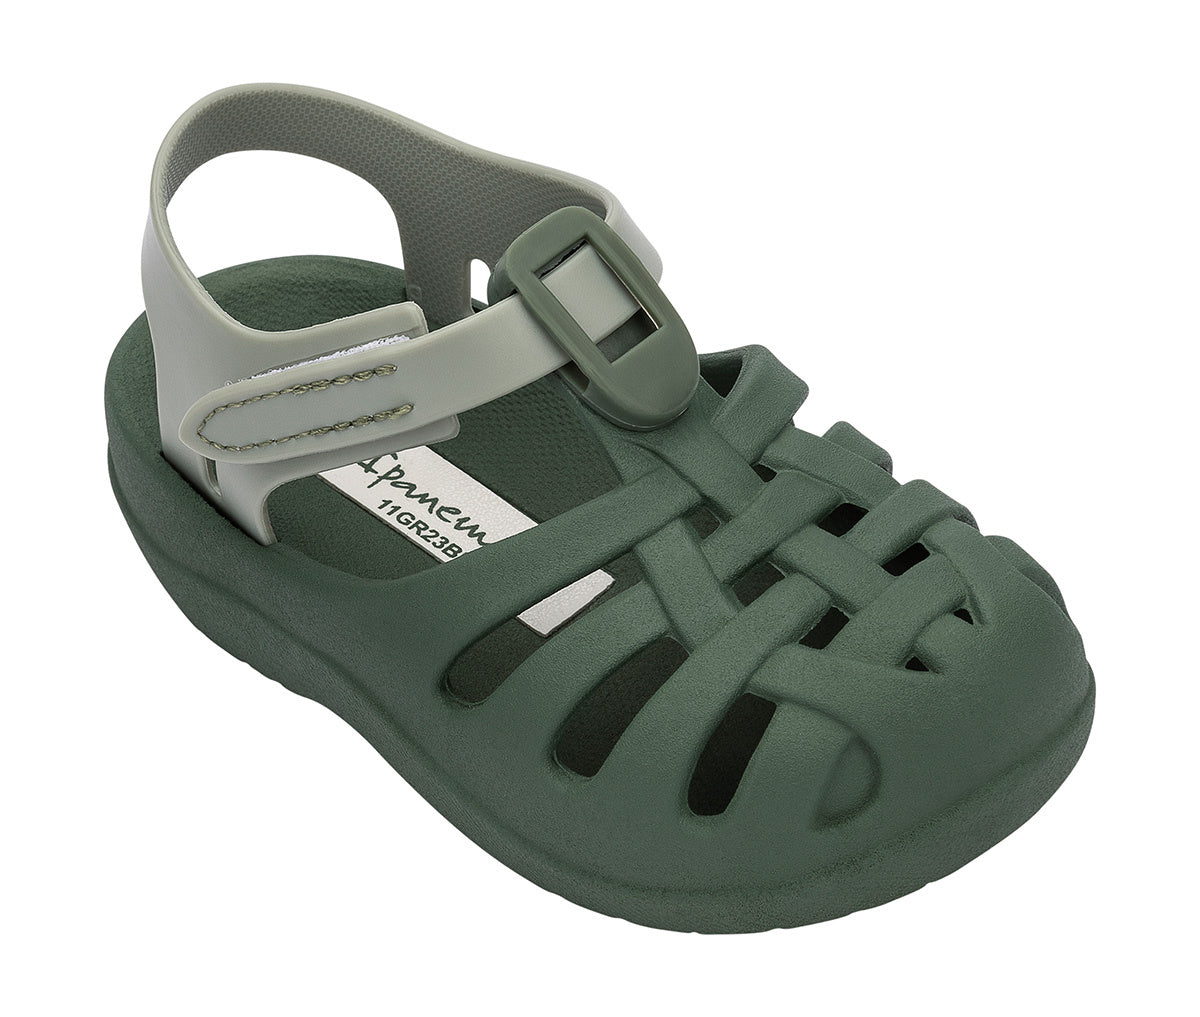 Angled view of a green Ipanema Summer Basic baby sandal.